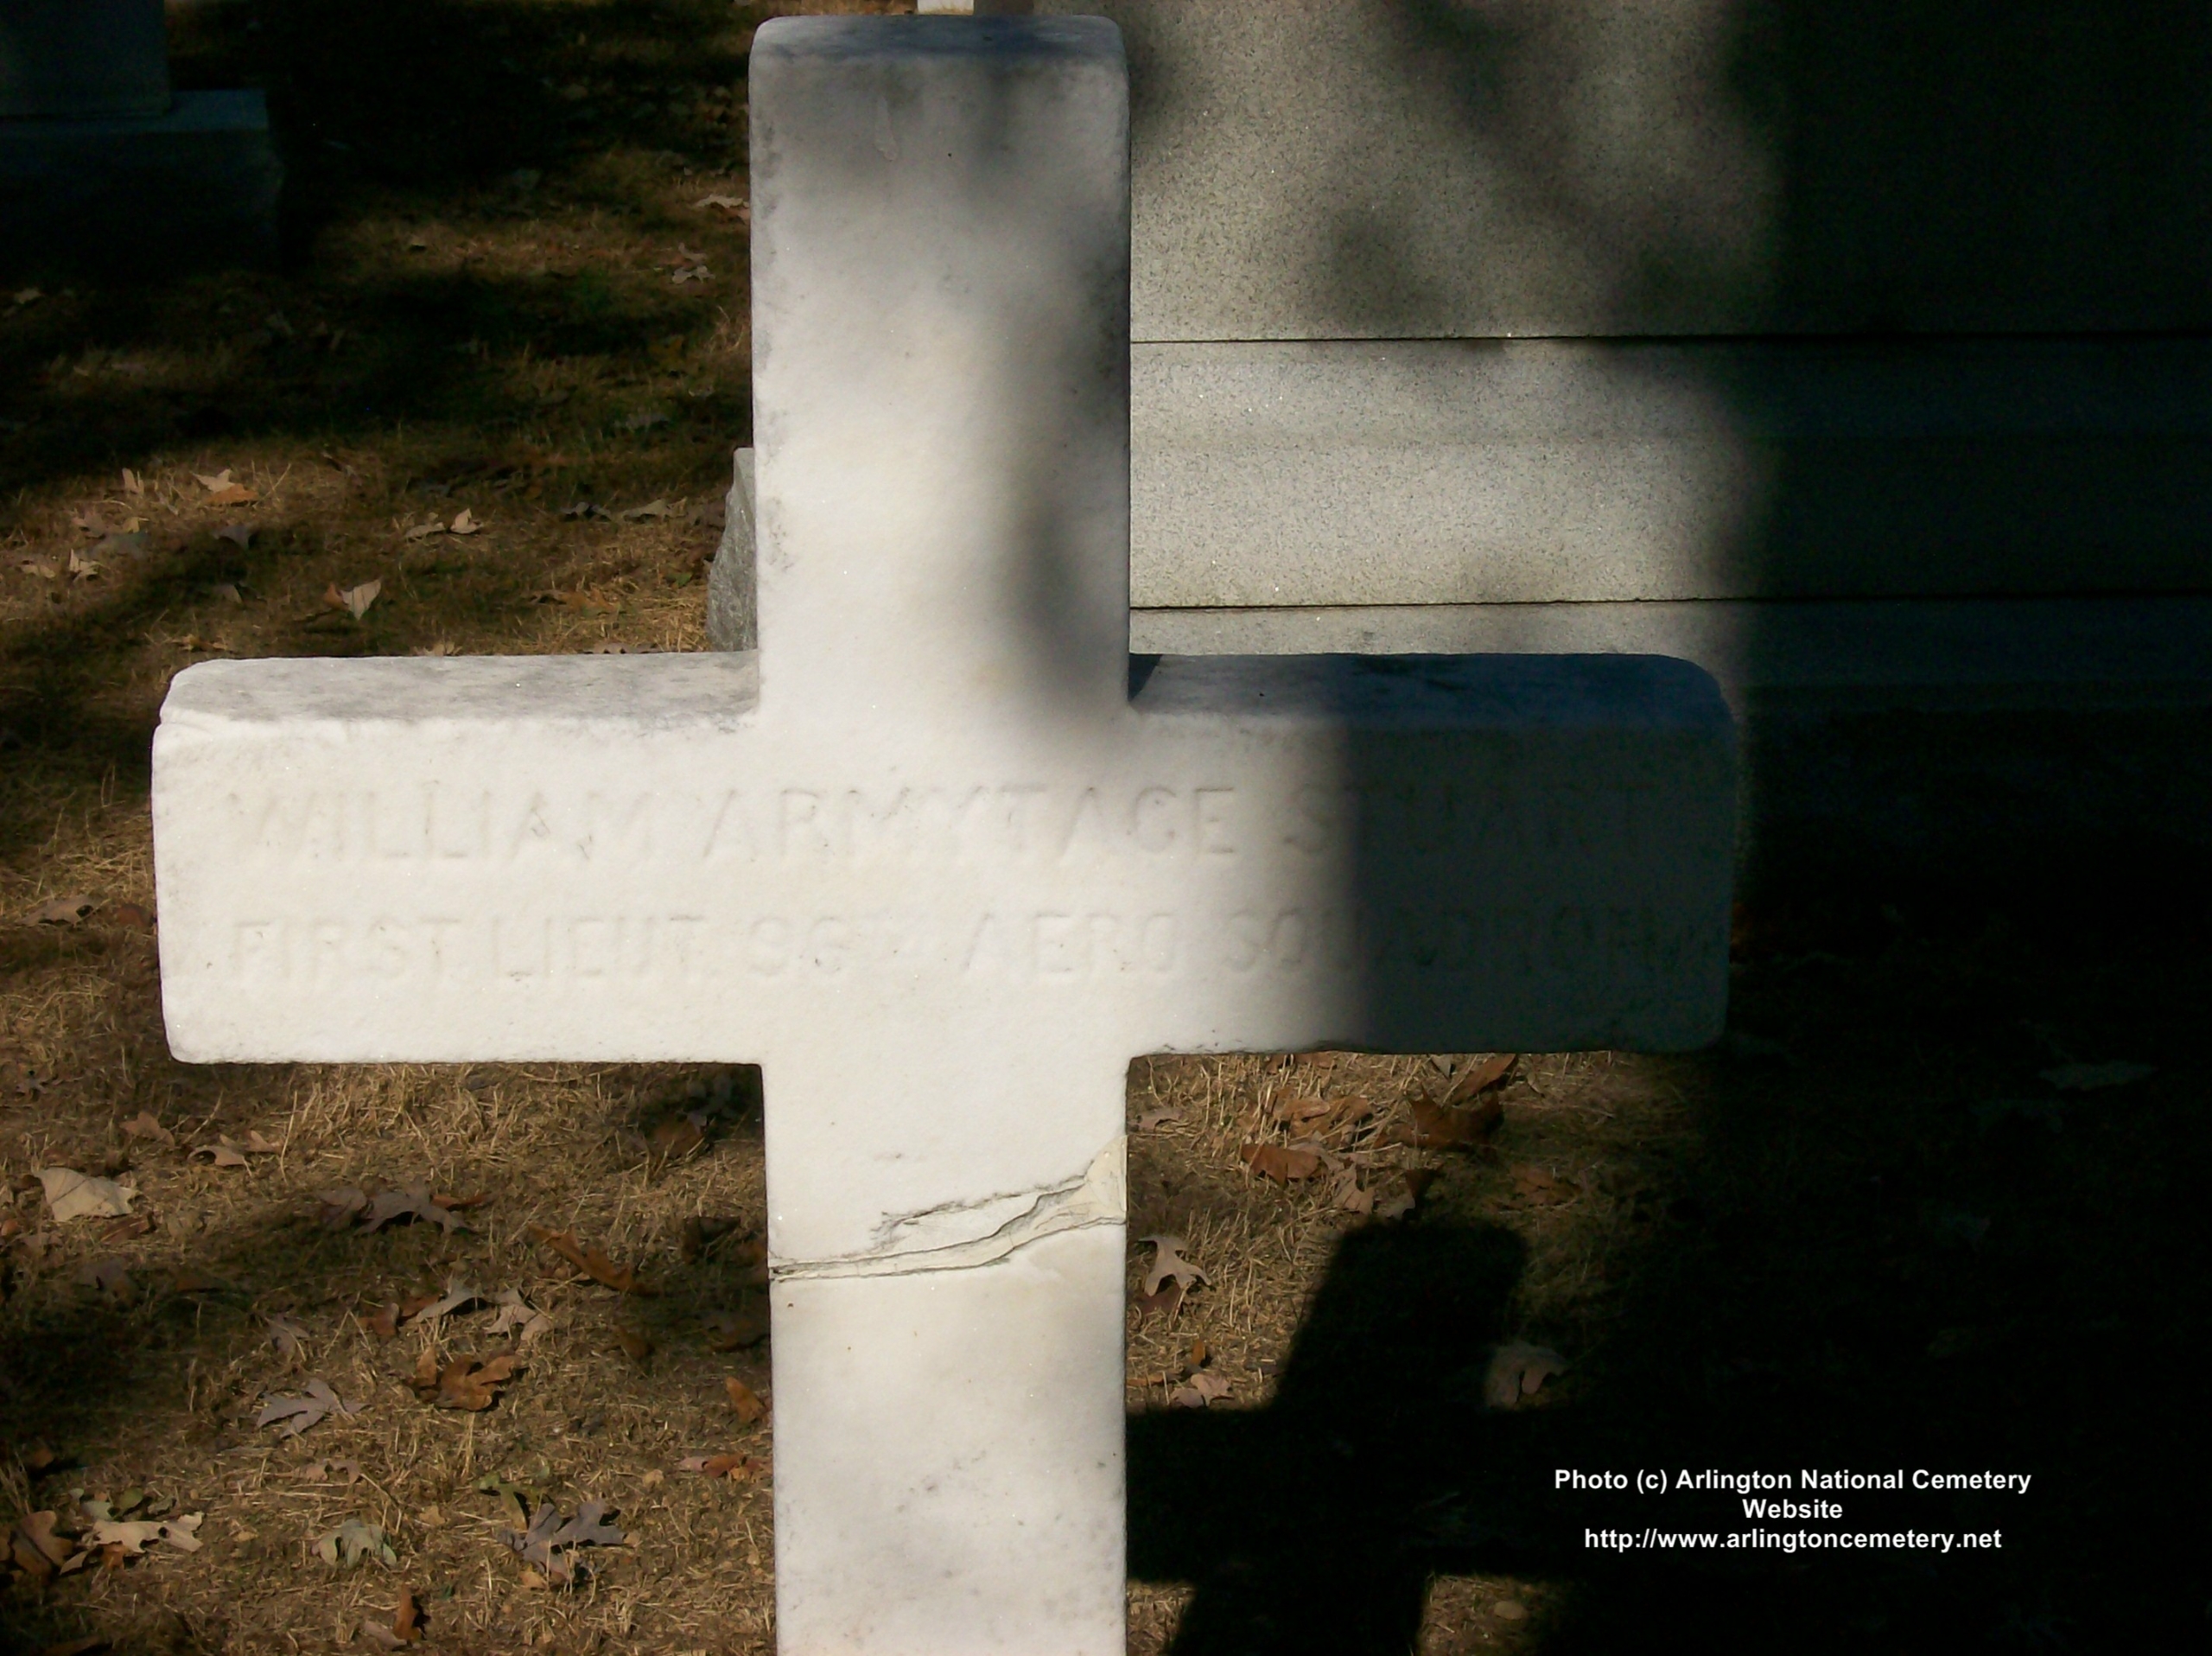 wastuart-gravesite-photo-october-2007-001